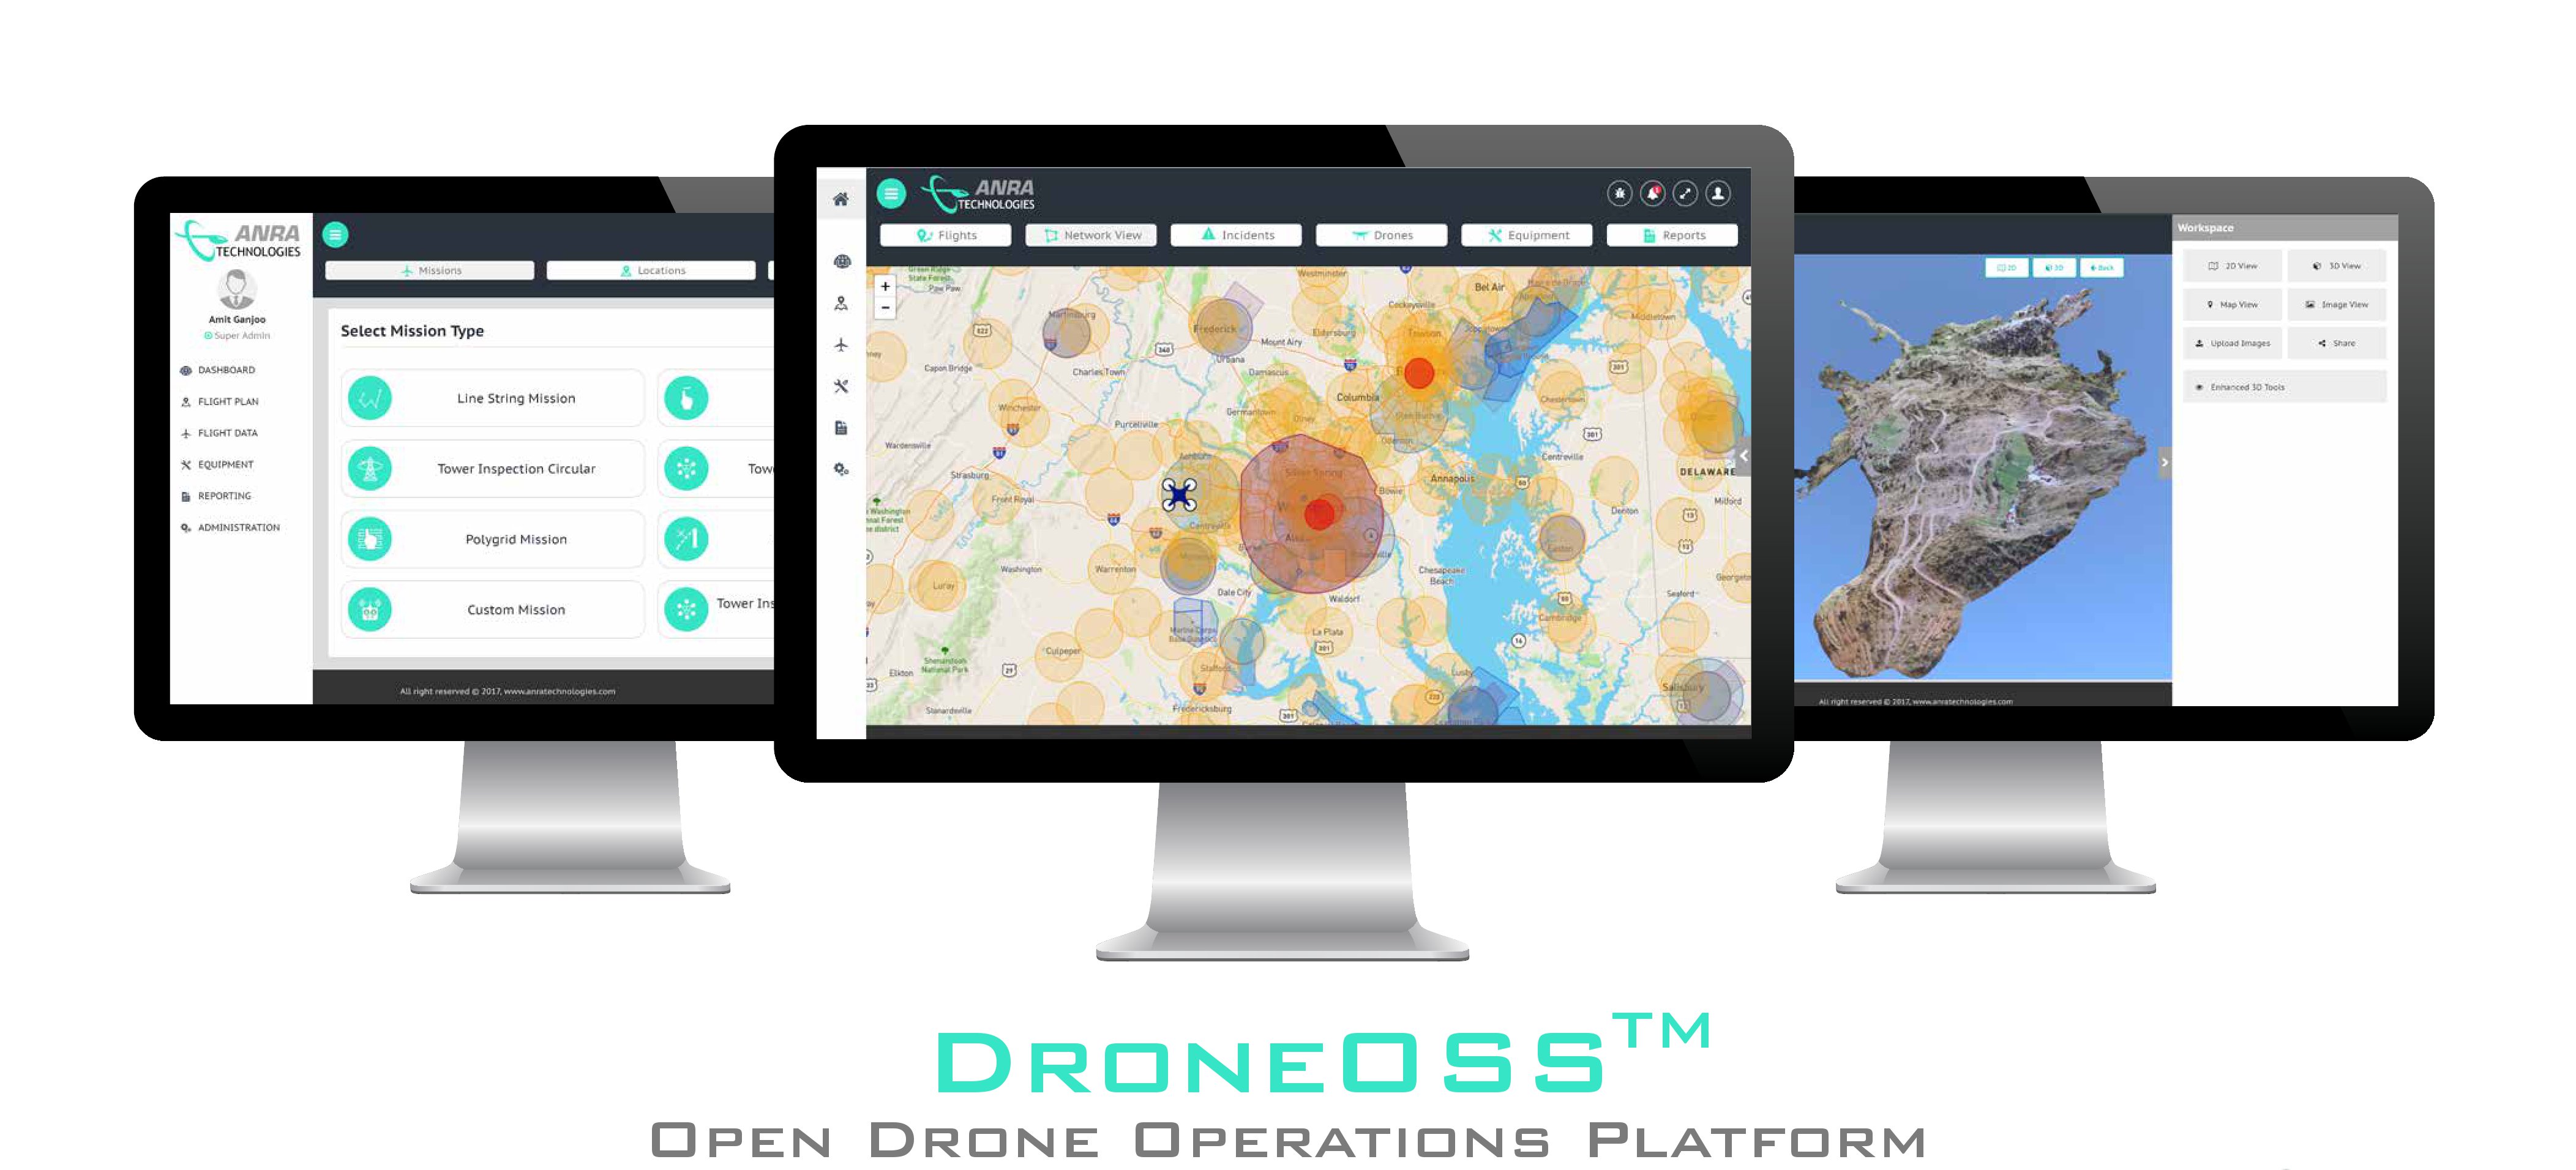 DroneOSS Platform